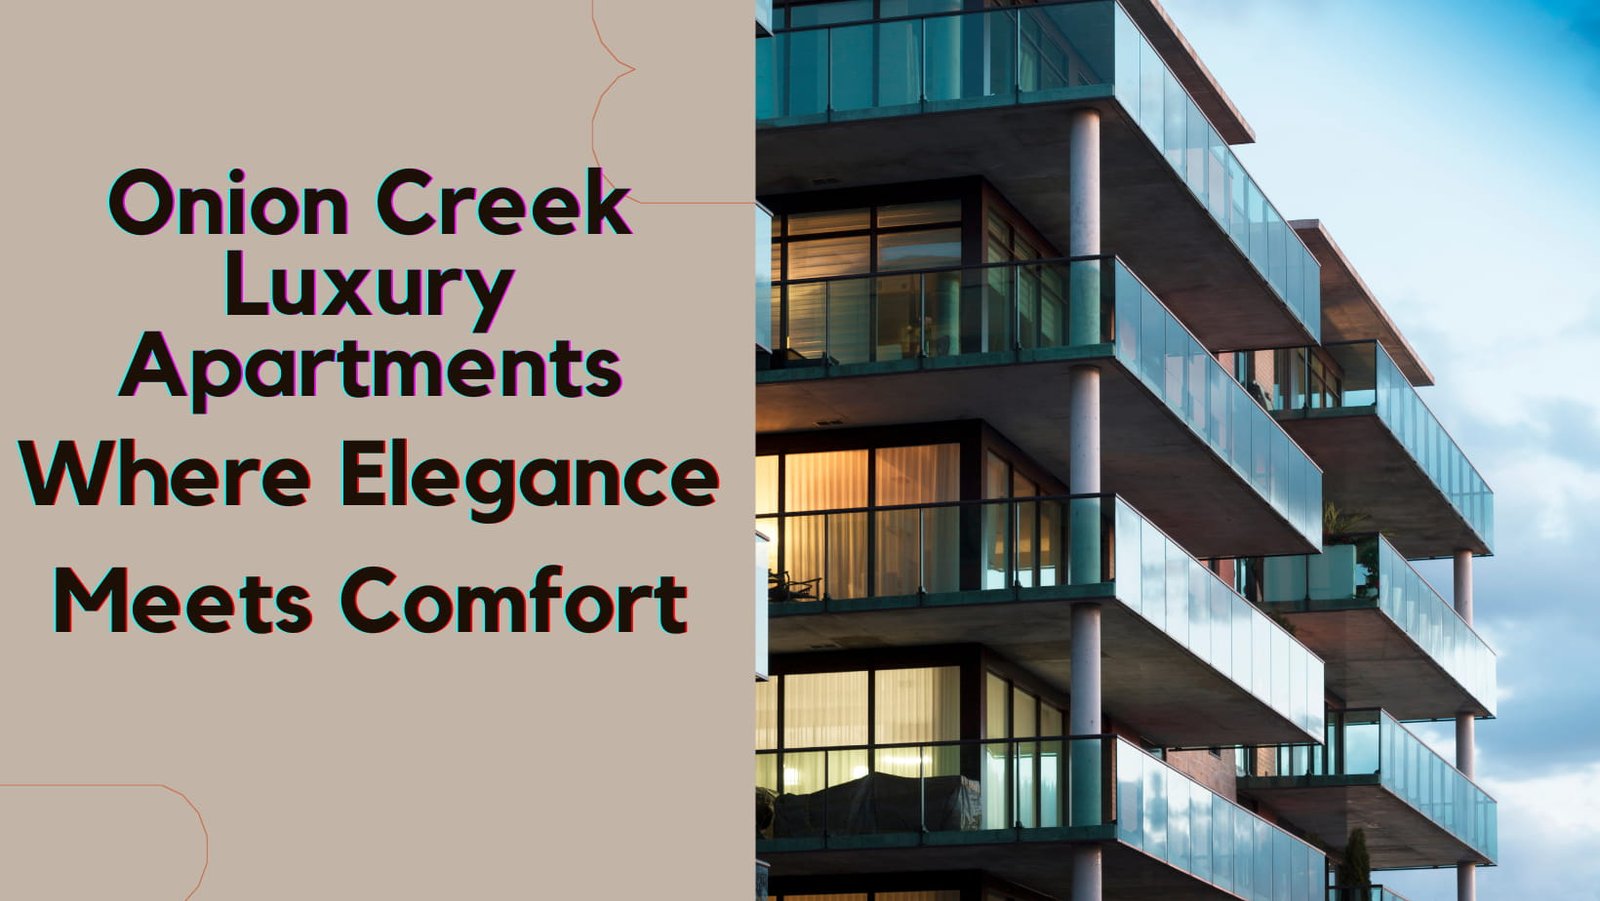 Onion Creek Luxury Apartments: Where Elegance Meets Comfort